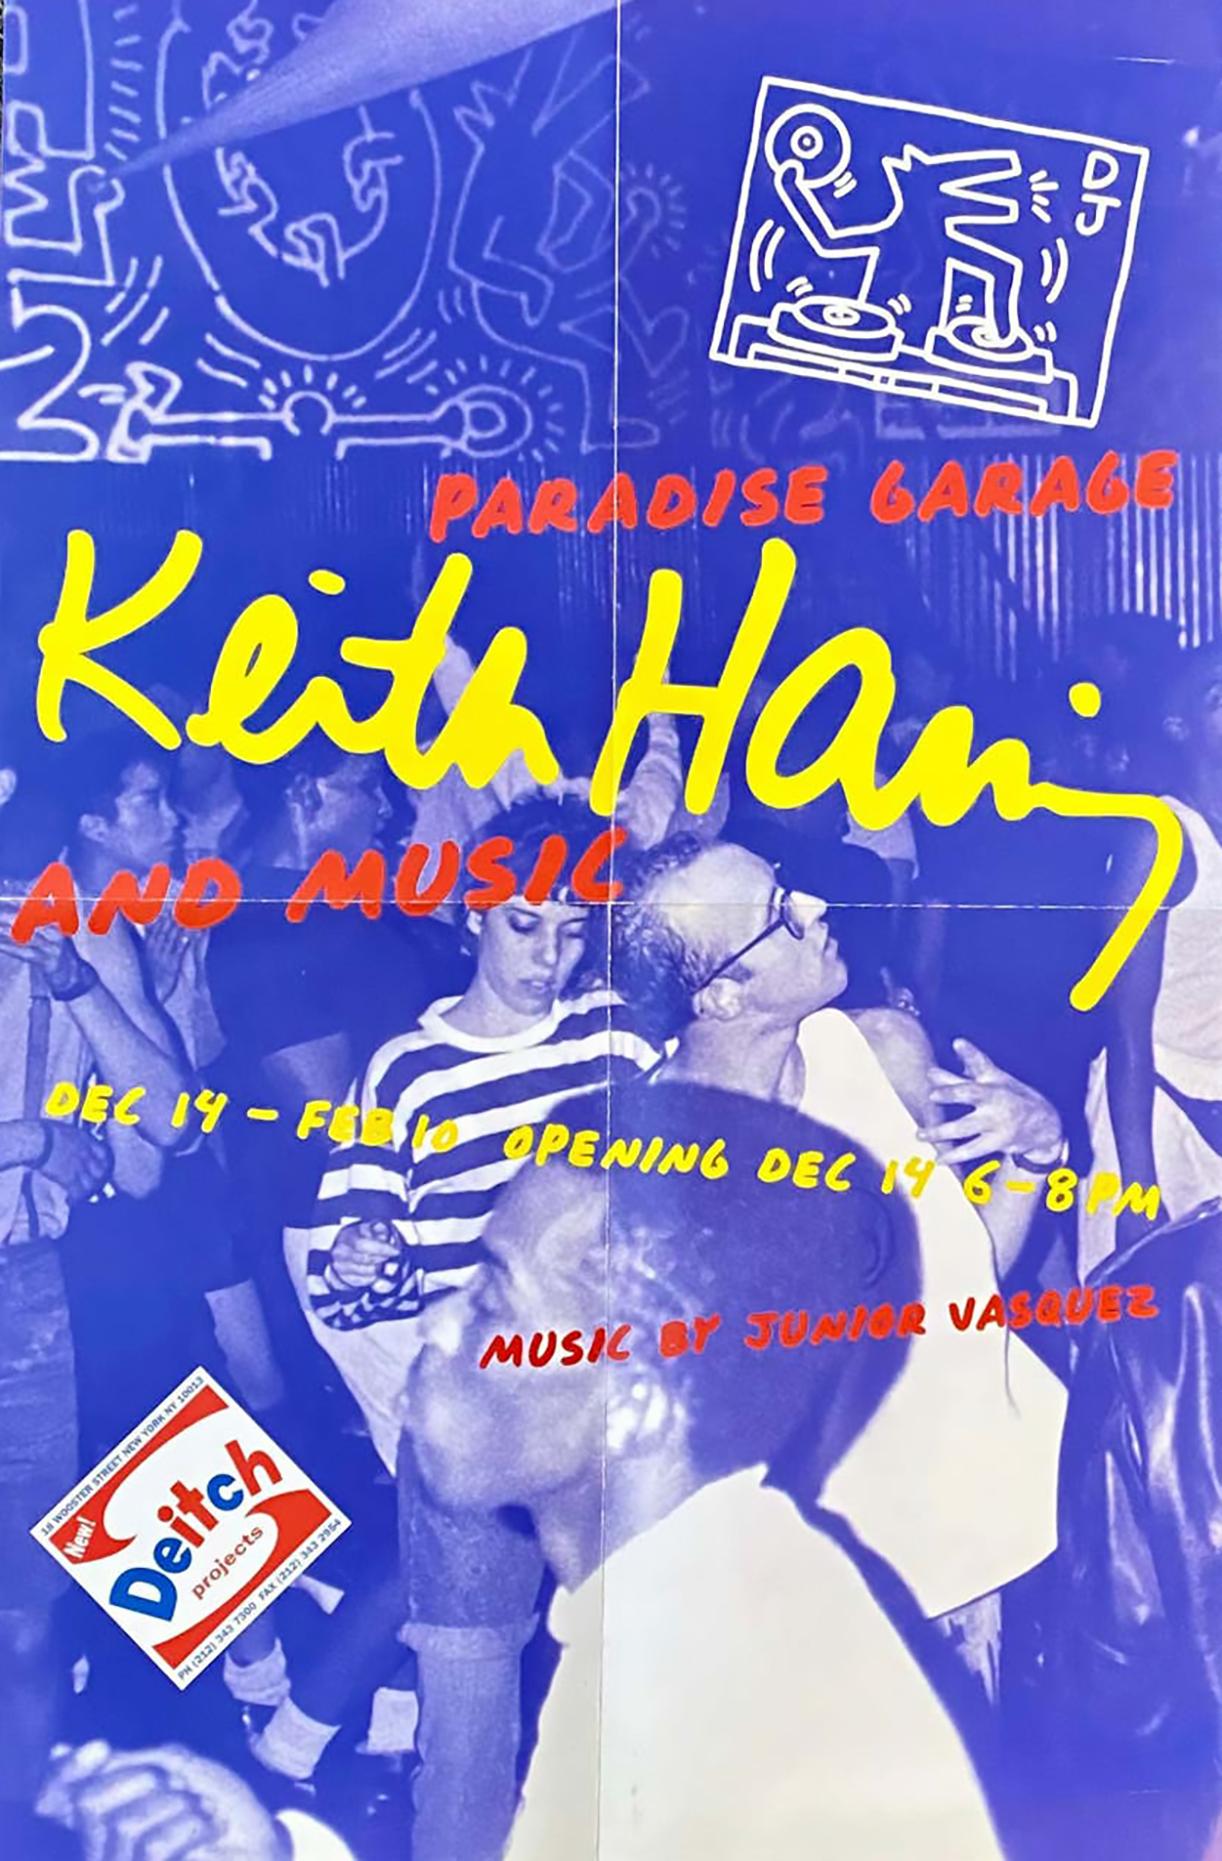 Affiche d'un exposition de garage de Keith Haring « Keith Haring Jeffrey Deitch »